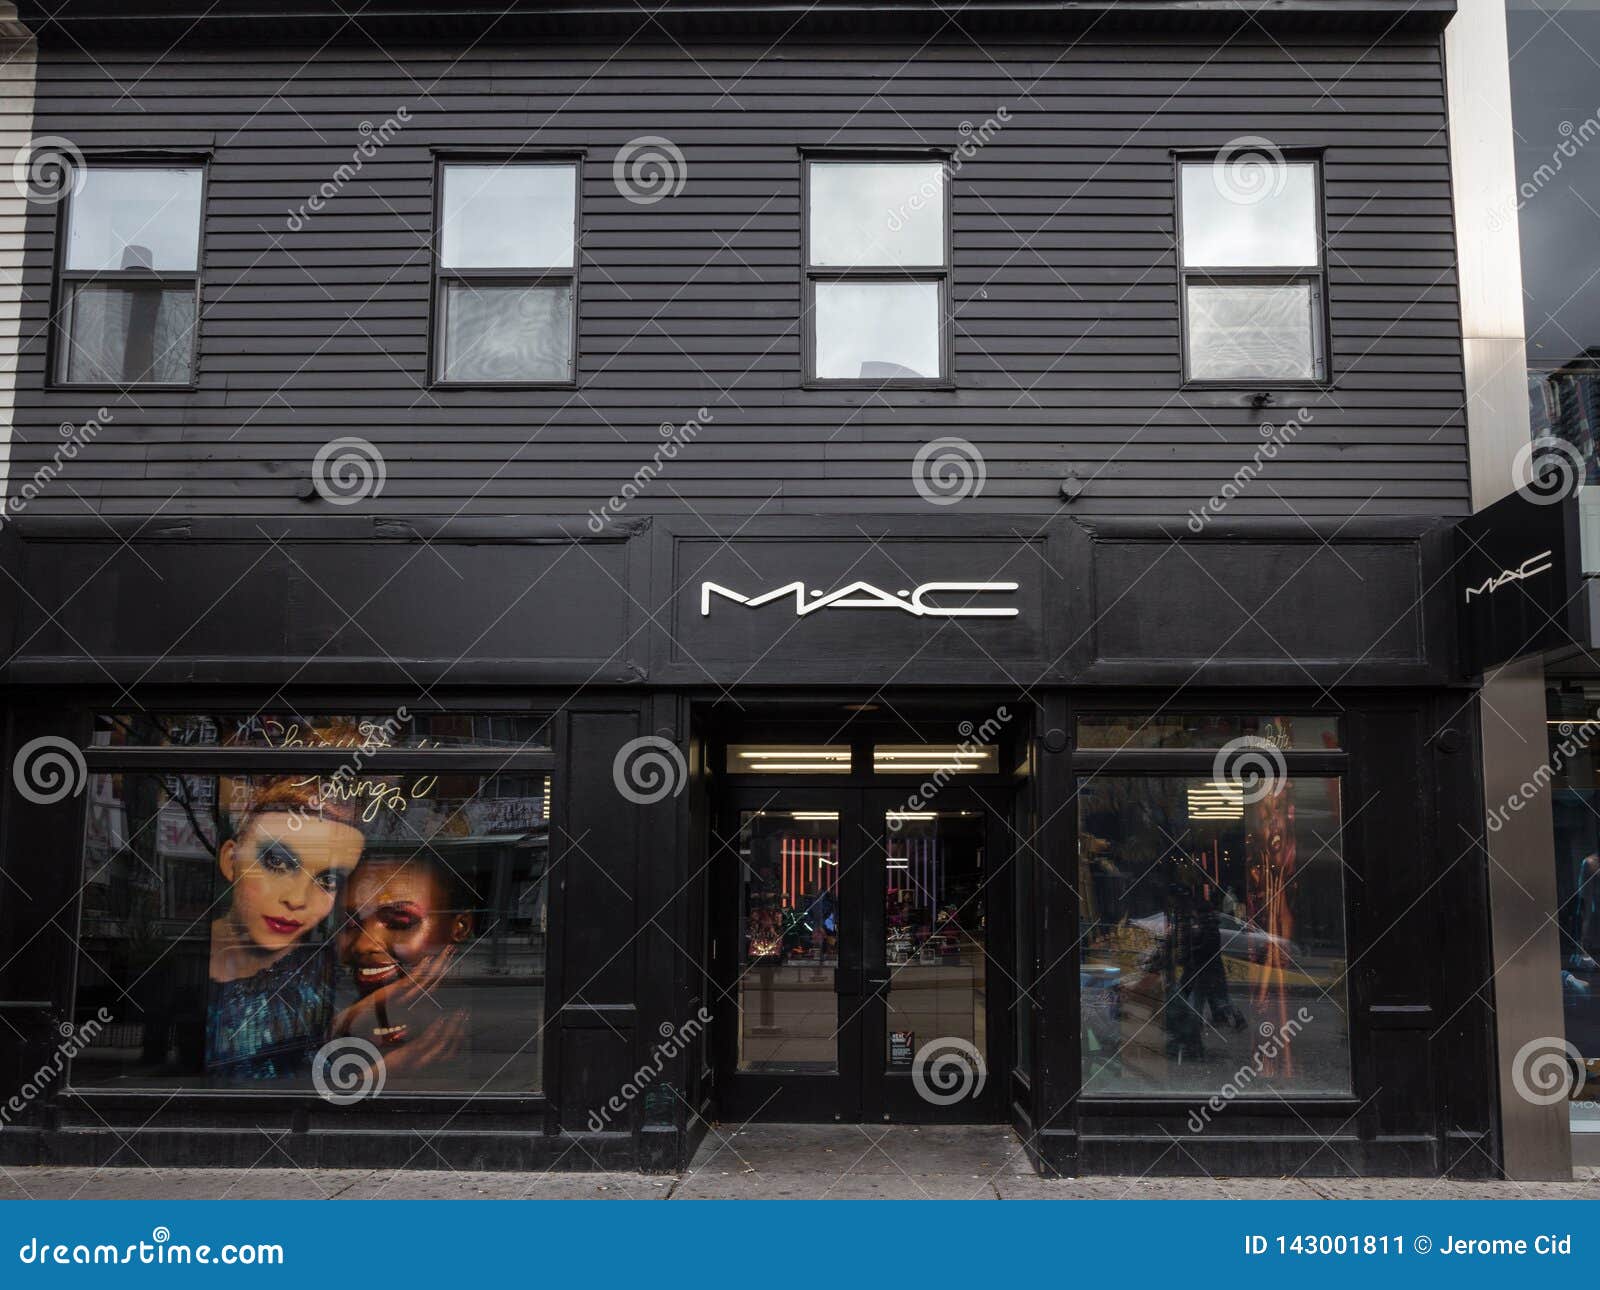 Fare gerningsmanden Spiller skak Mac Cosmetics Logo on Their Main Store for Downtown Toronto, Ontario.  Editorial Photo - Image of canadian, makeup: 143001811